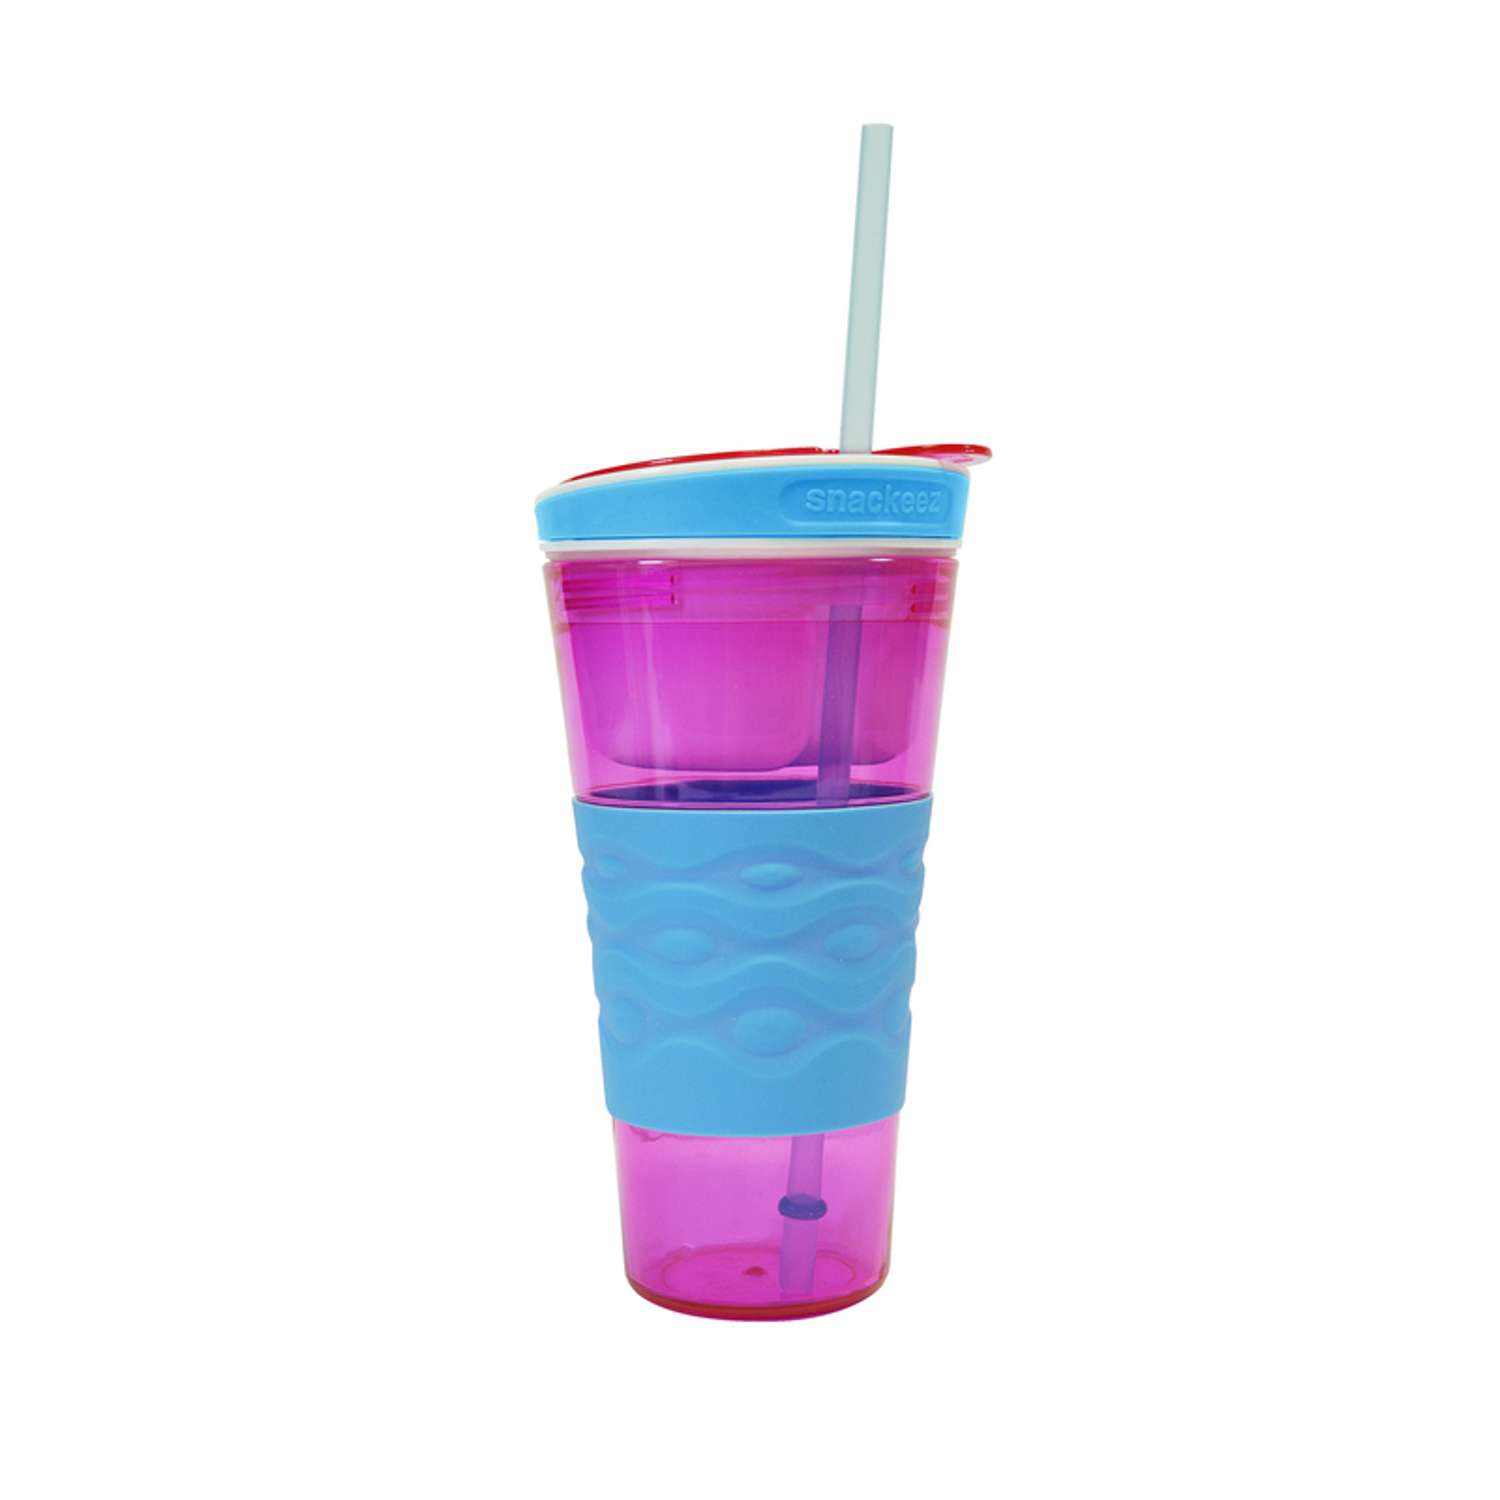 Snackeez Travel Snack & Drink Cup with Straw, Blue,16 oz